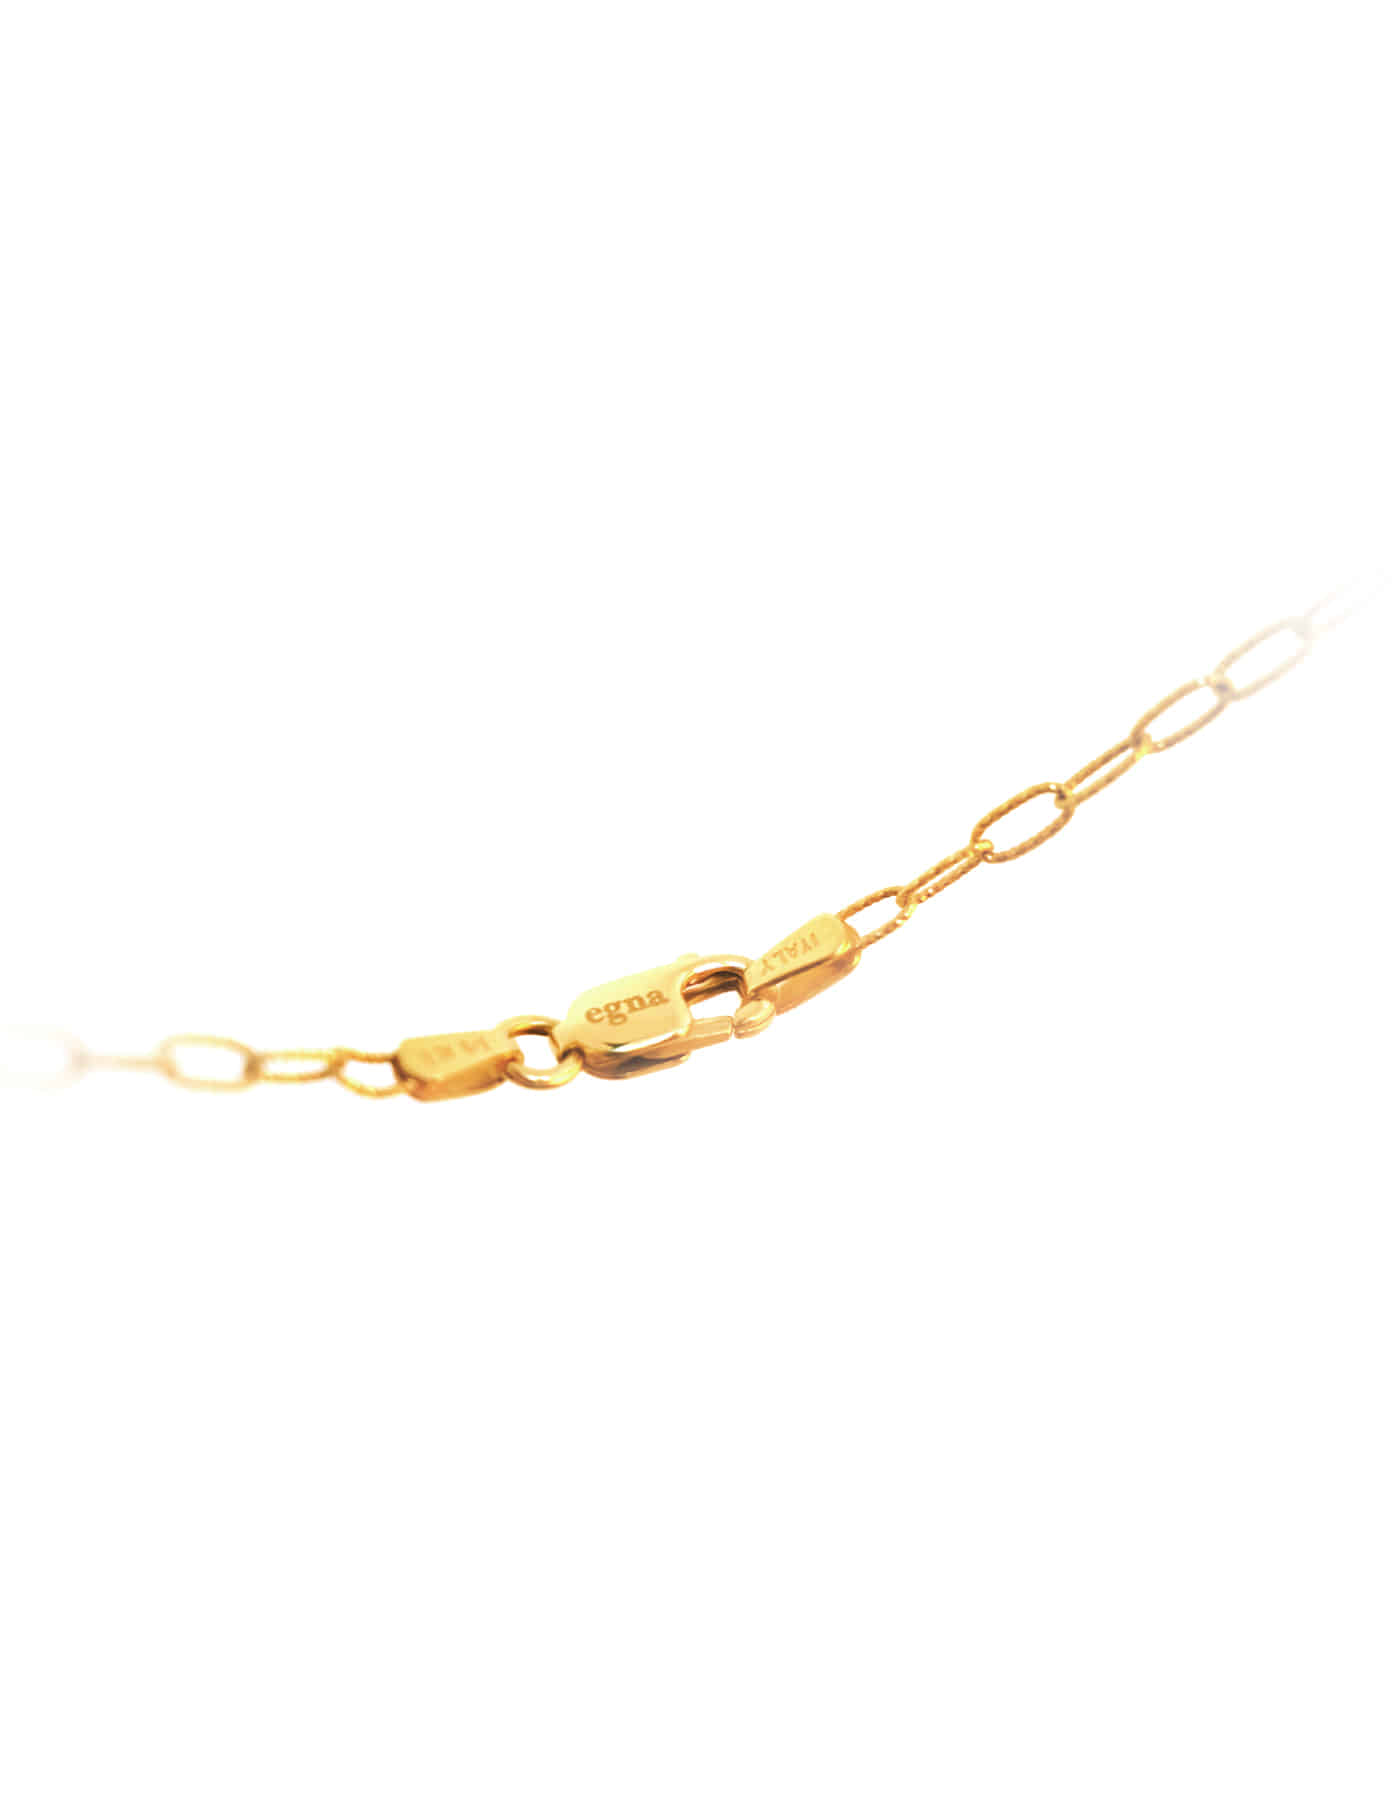 14k Glitter Texture Chain Necklace